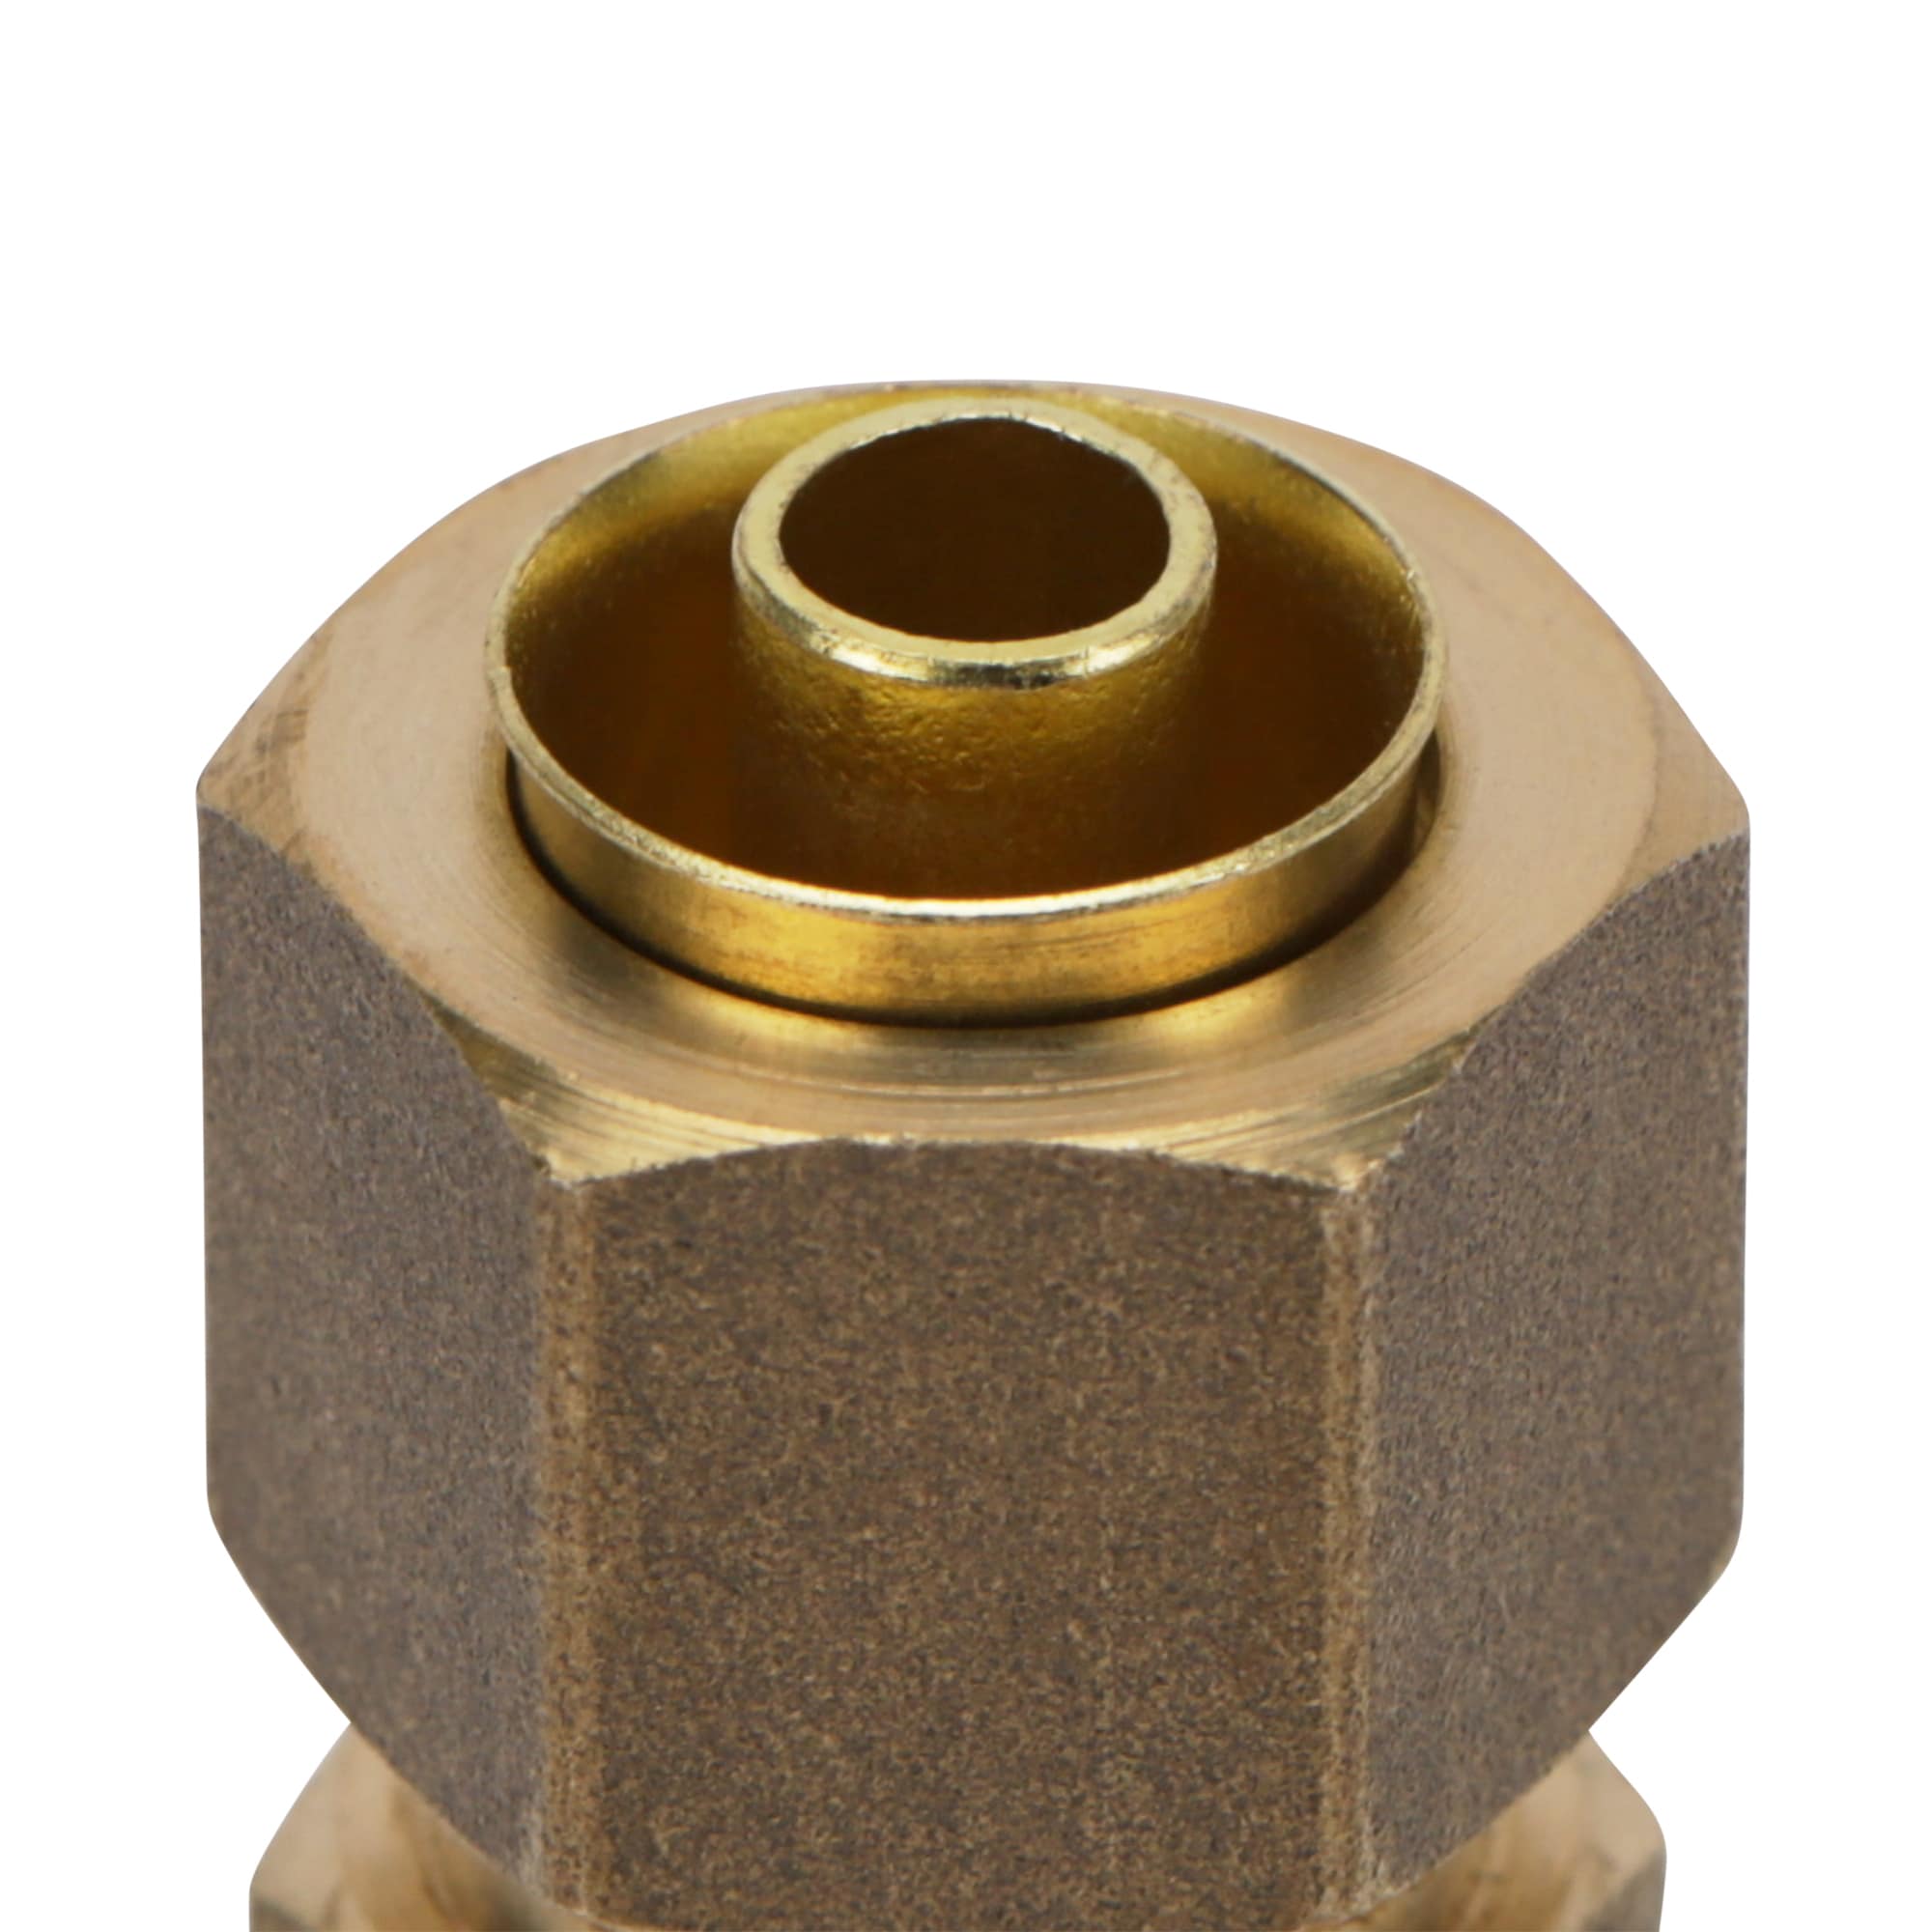 Medium Duty 3/8 inch Brass Compression Elbow Misting System Parts